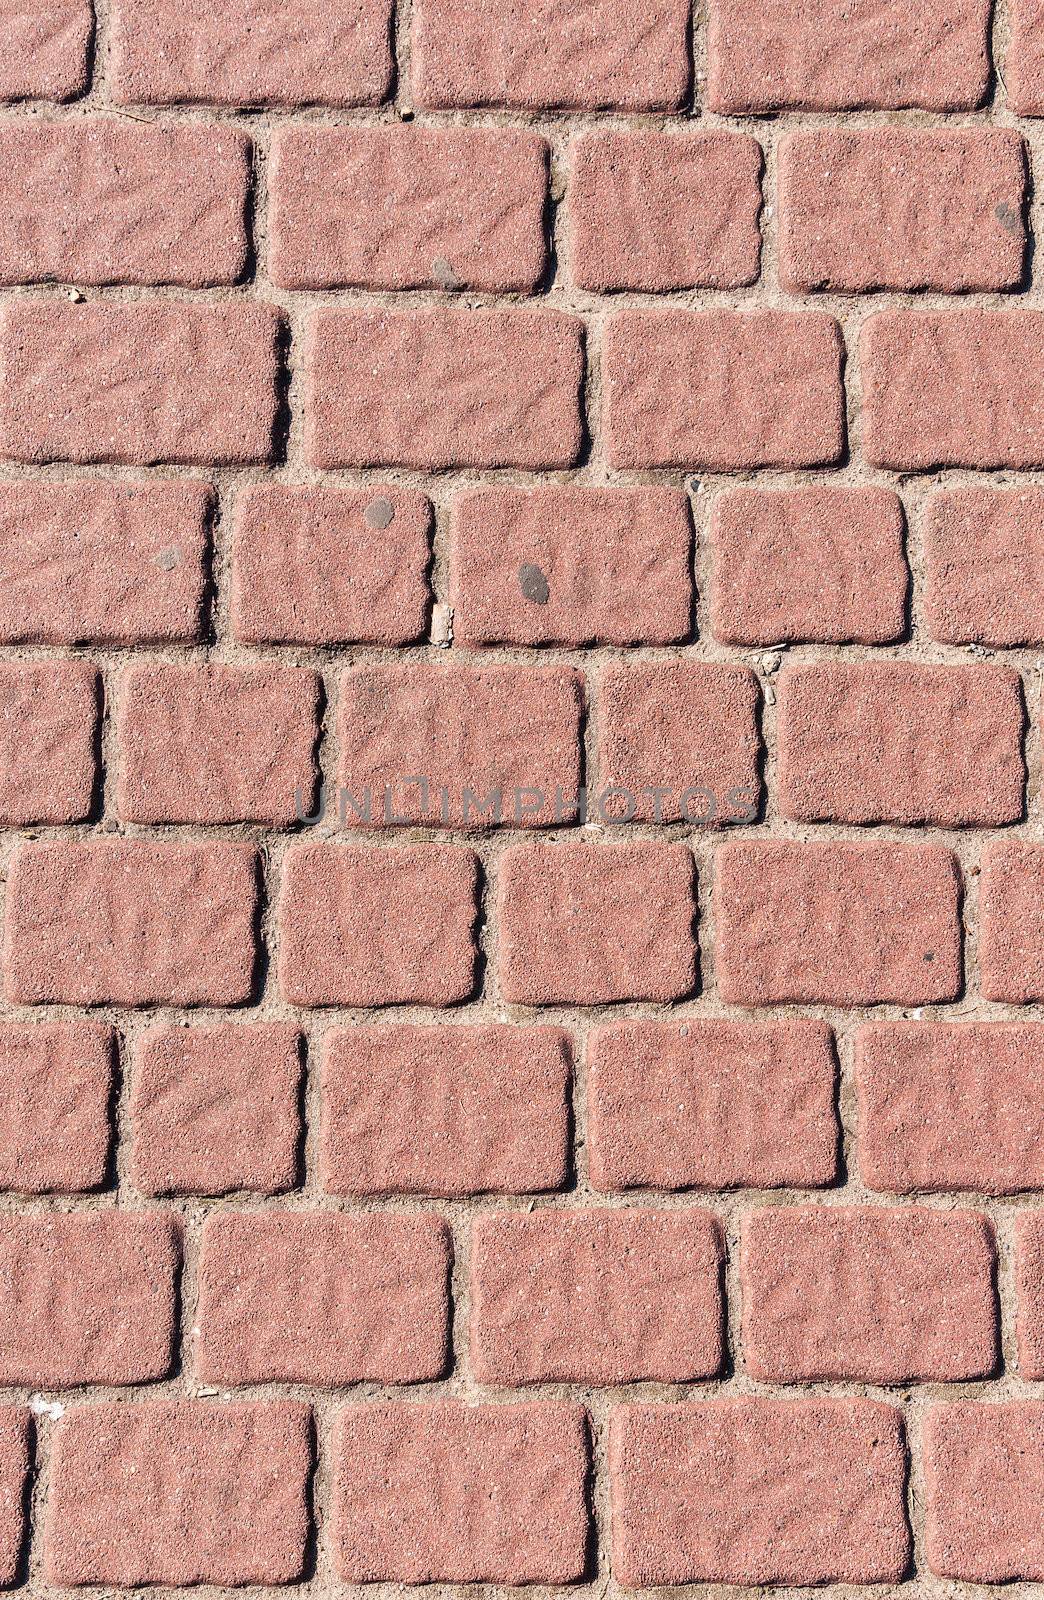 Red sett bricks, texture or background, pavement.